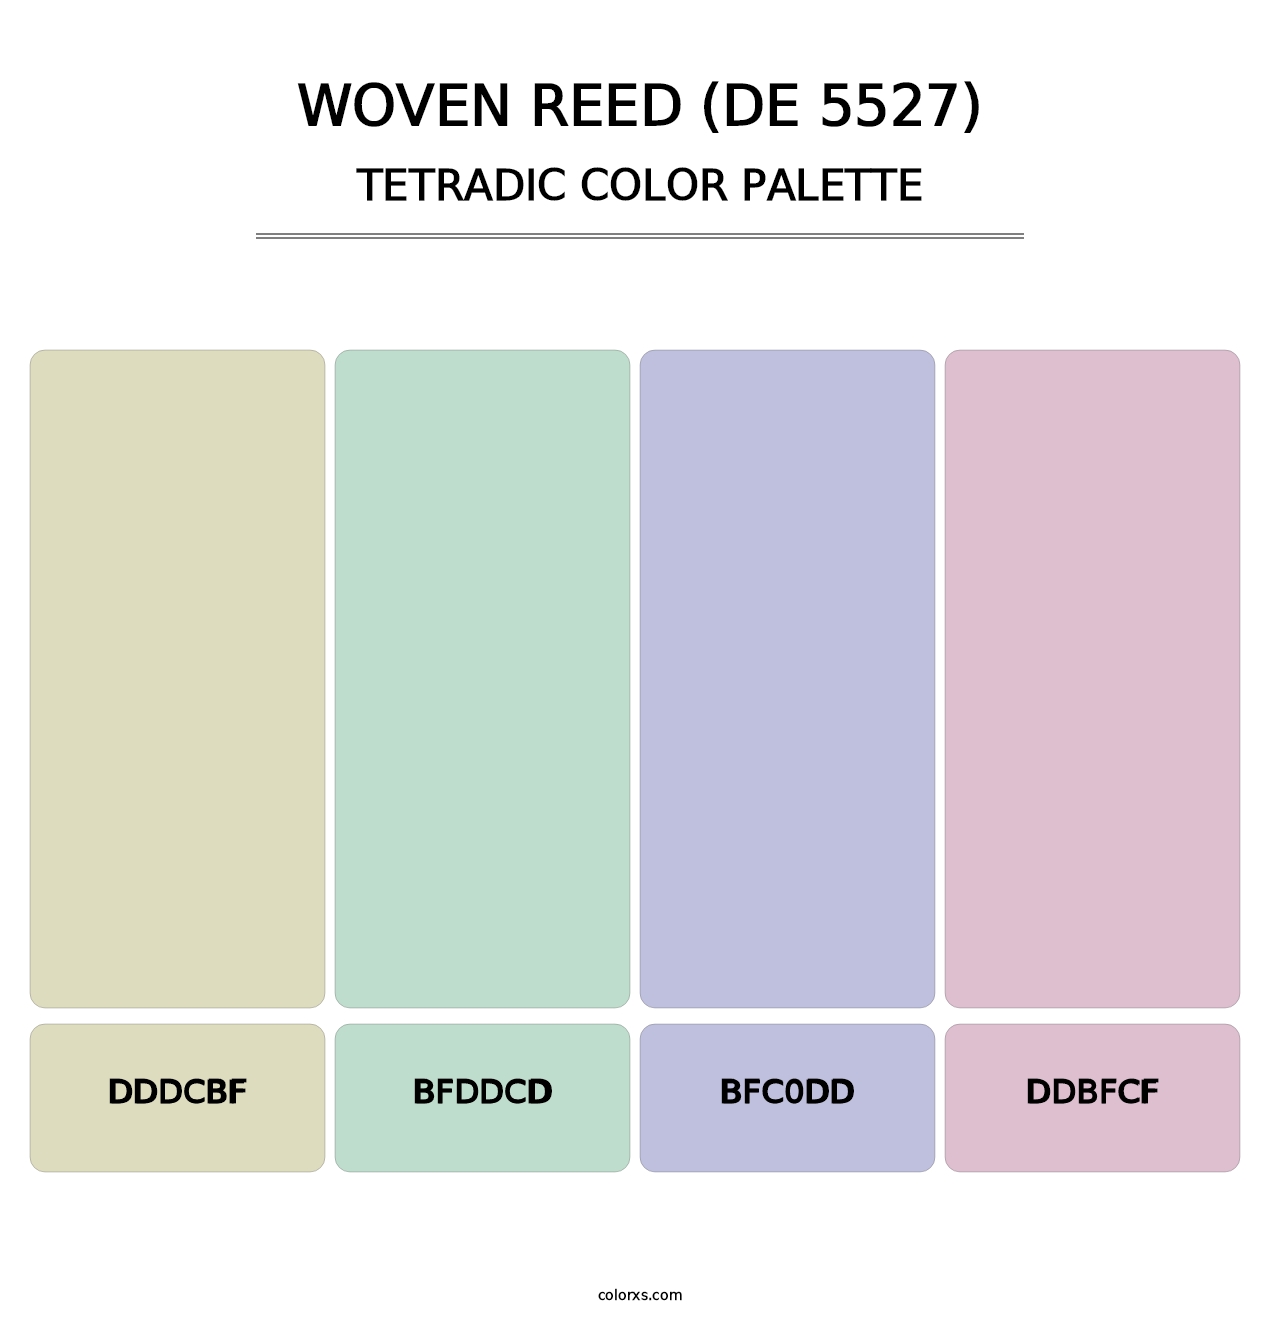 Woven Reed (DE 5527) - Tetradic Color Palette